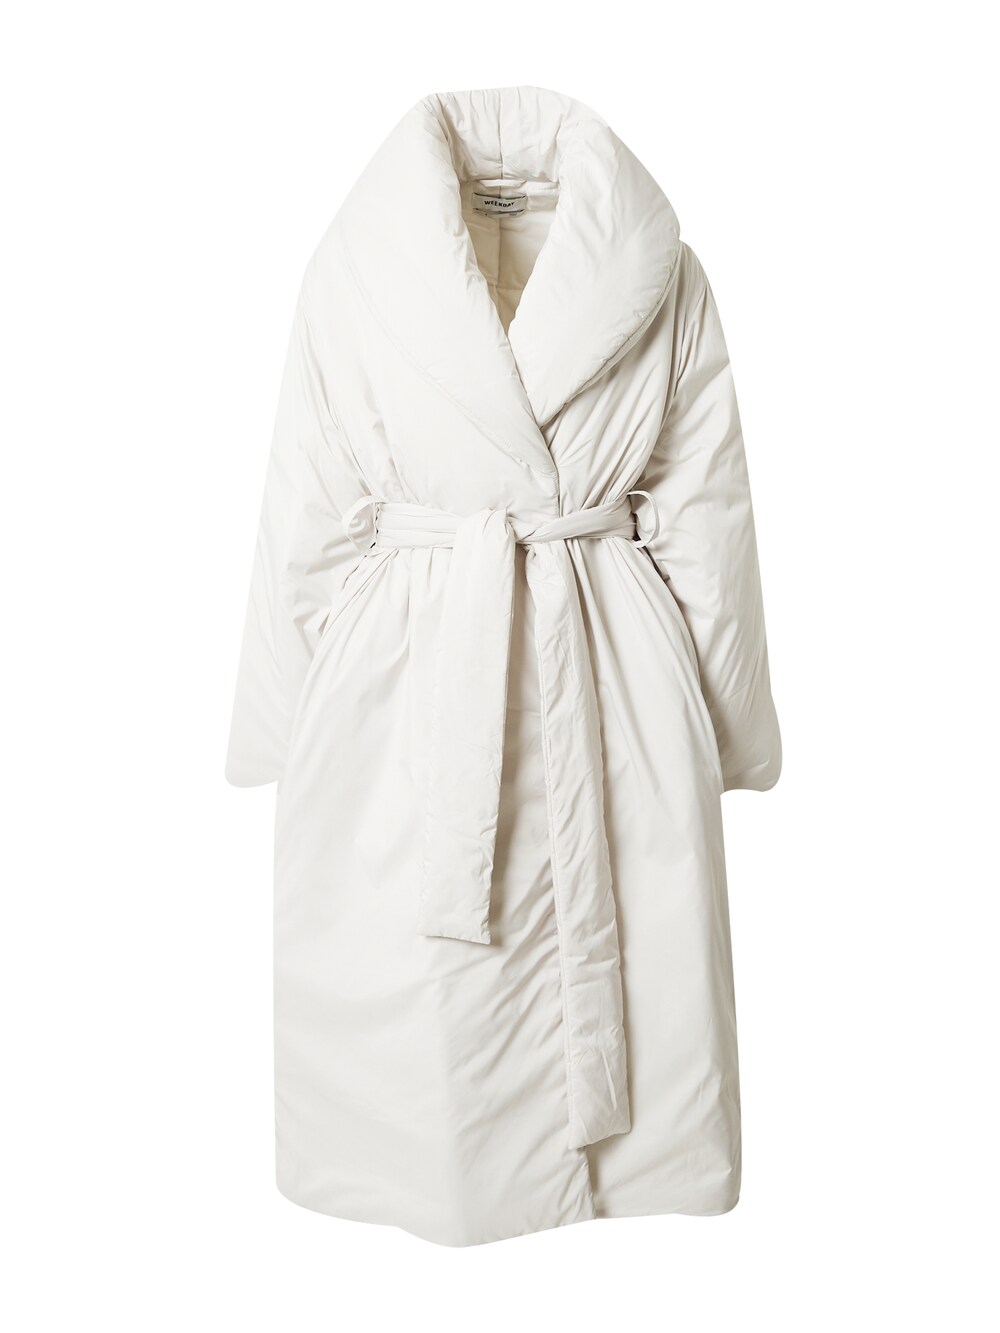 Межсезонное пальто WEEKDAY Zyan, натуральный белый межсезонное пальто weekday черный